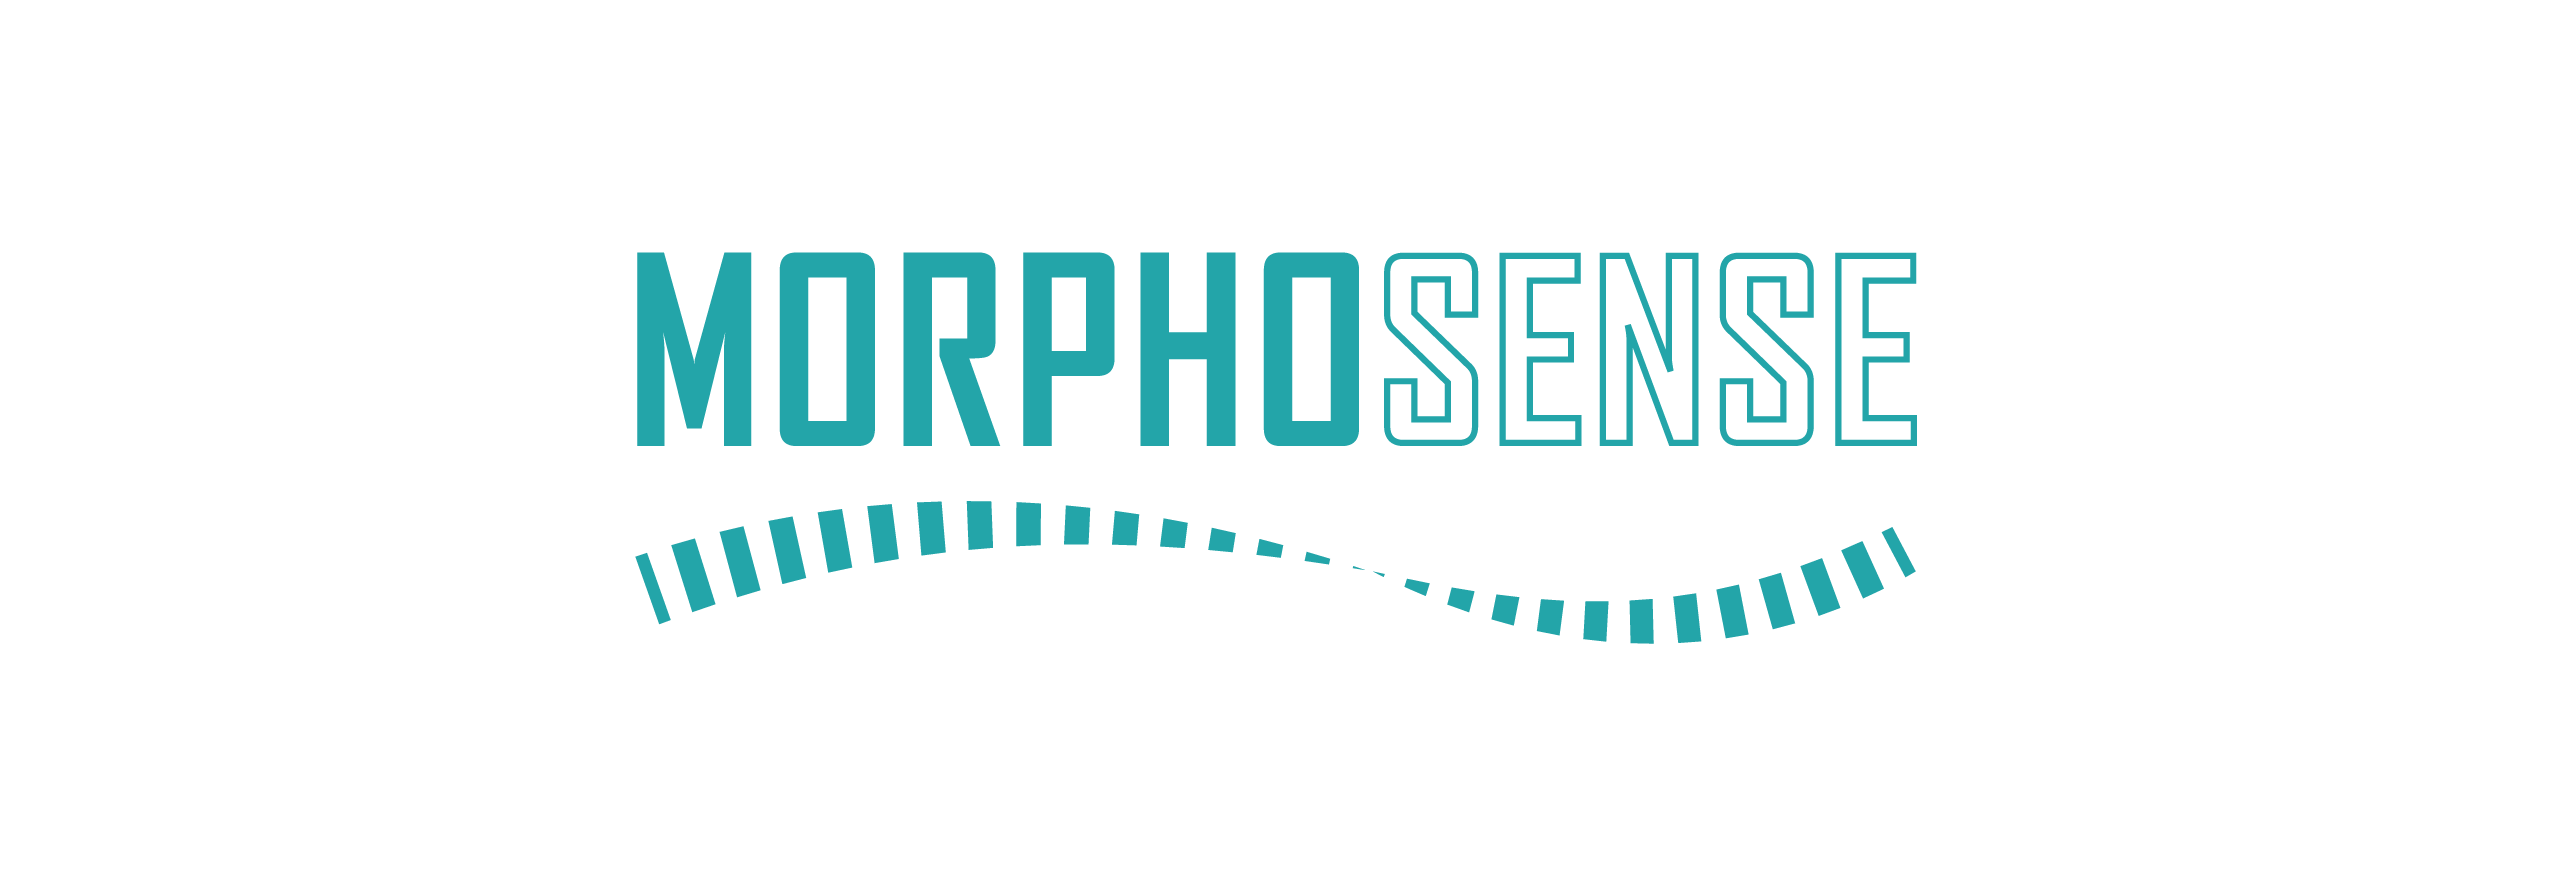 Morphosense logo